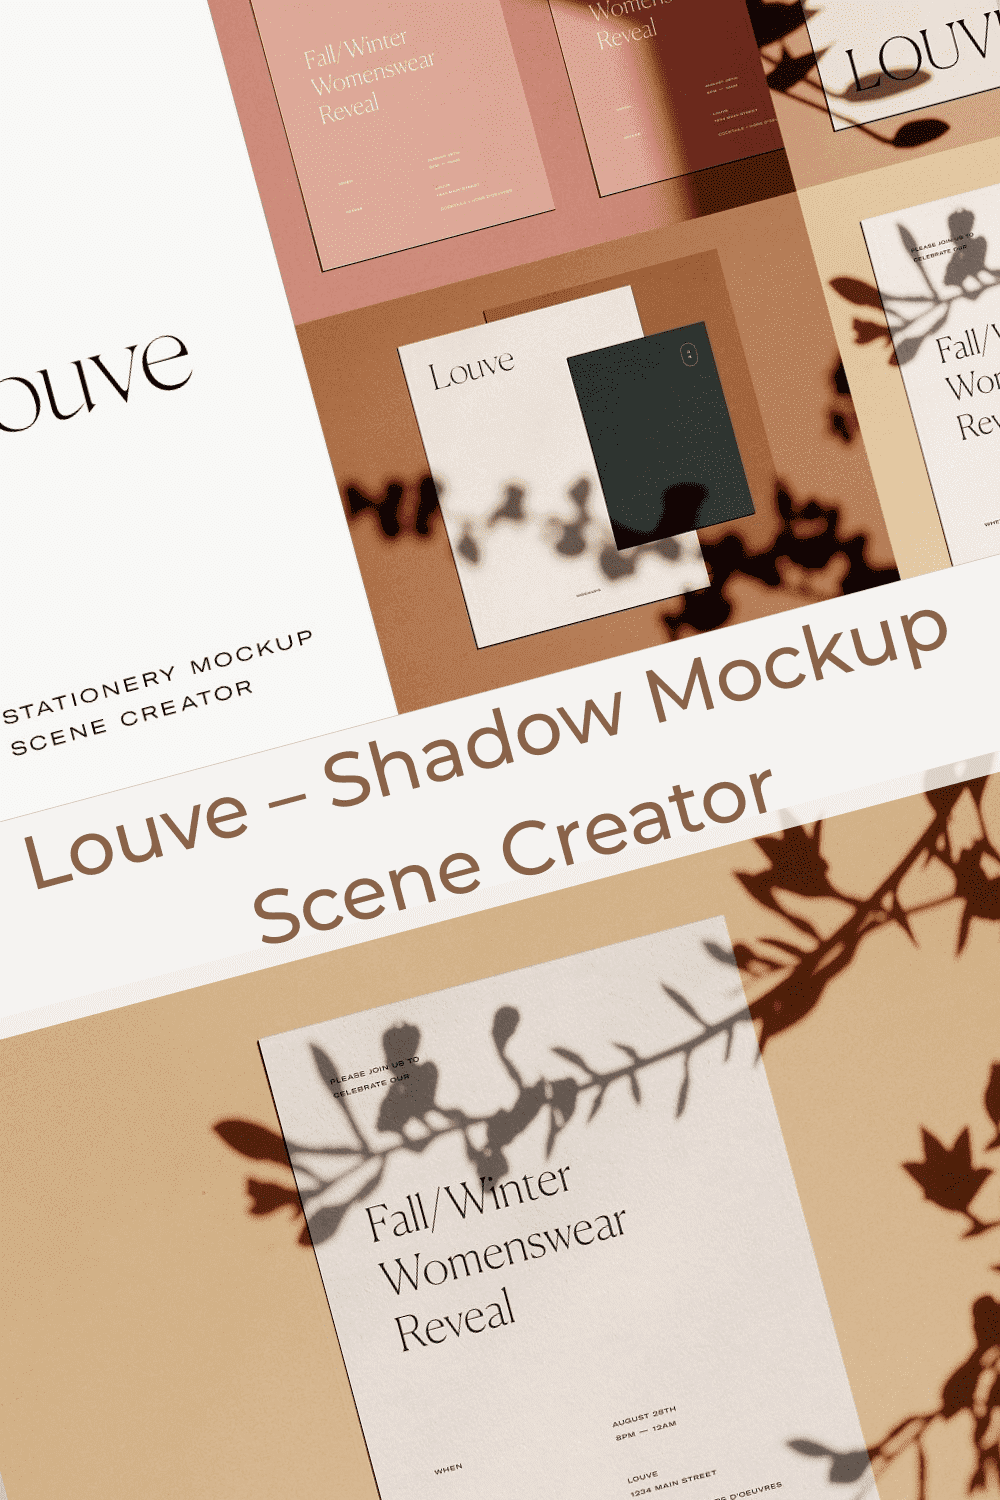 Louve - Shadow Mockup Scene Creator - "Stationery Mockup Scene Creator".